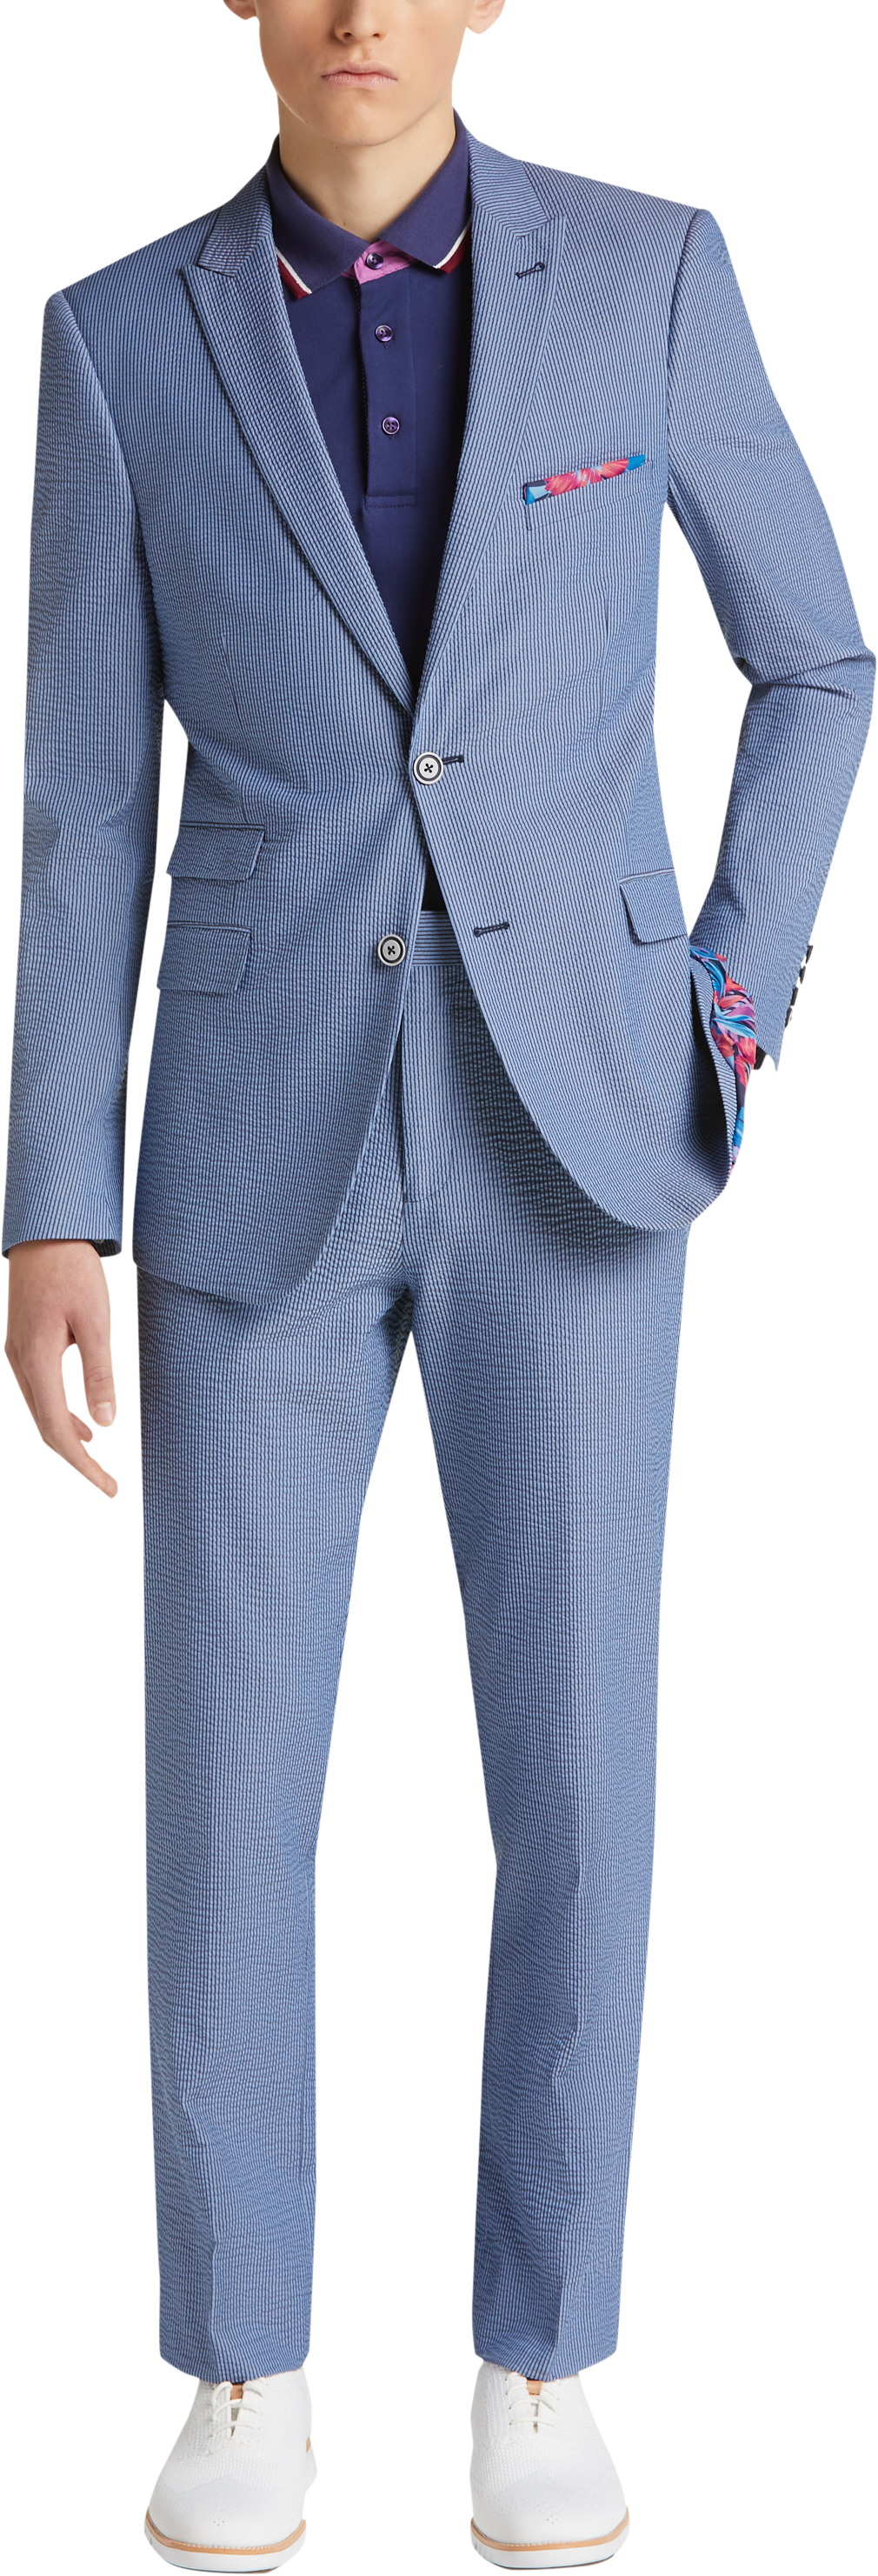 Paisley & Gray Slim Fit Suit Separates Coat, Navy & Blue Seersucker ...